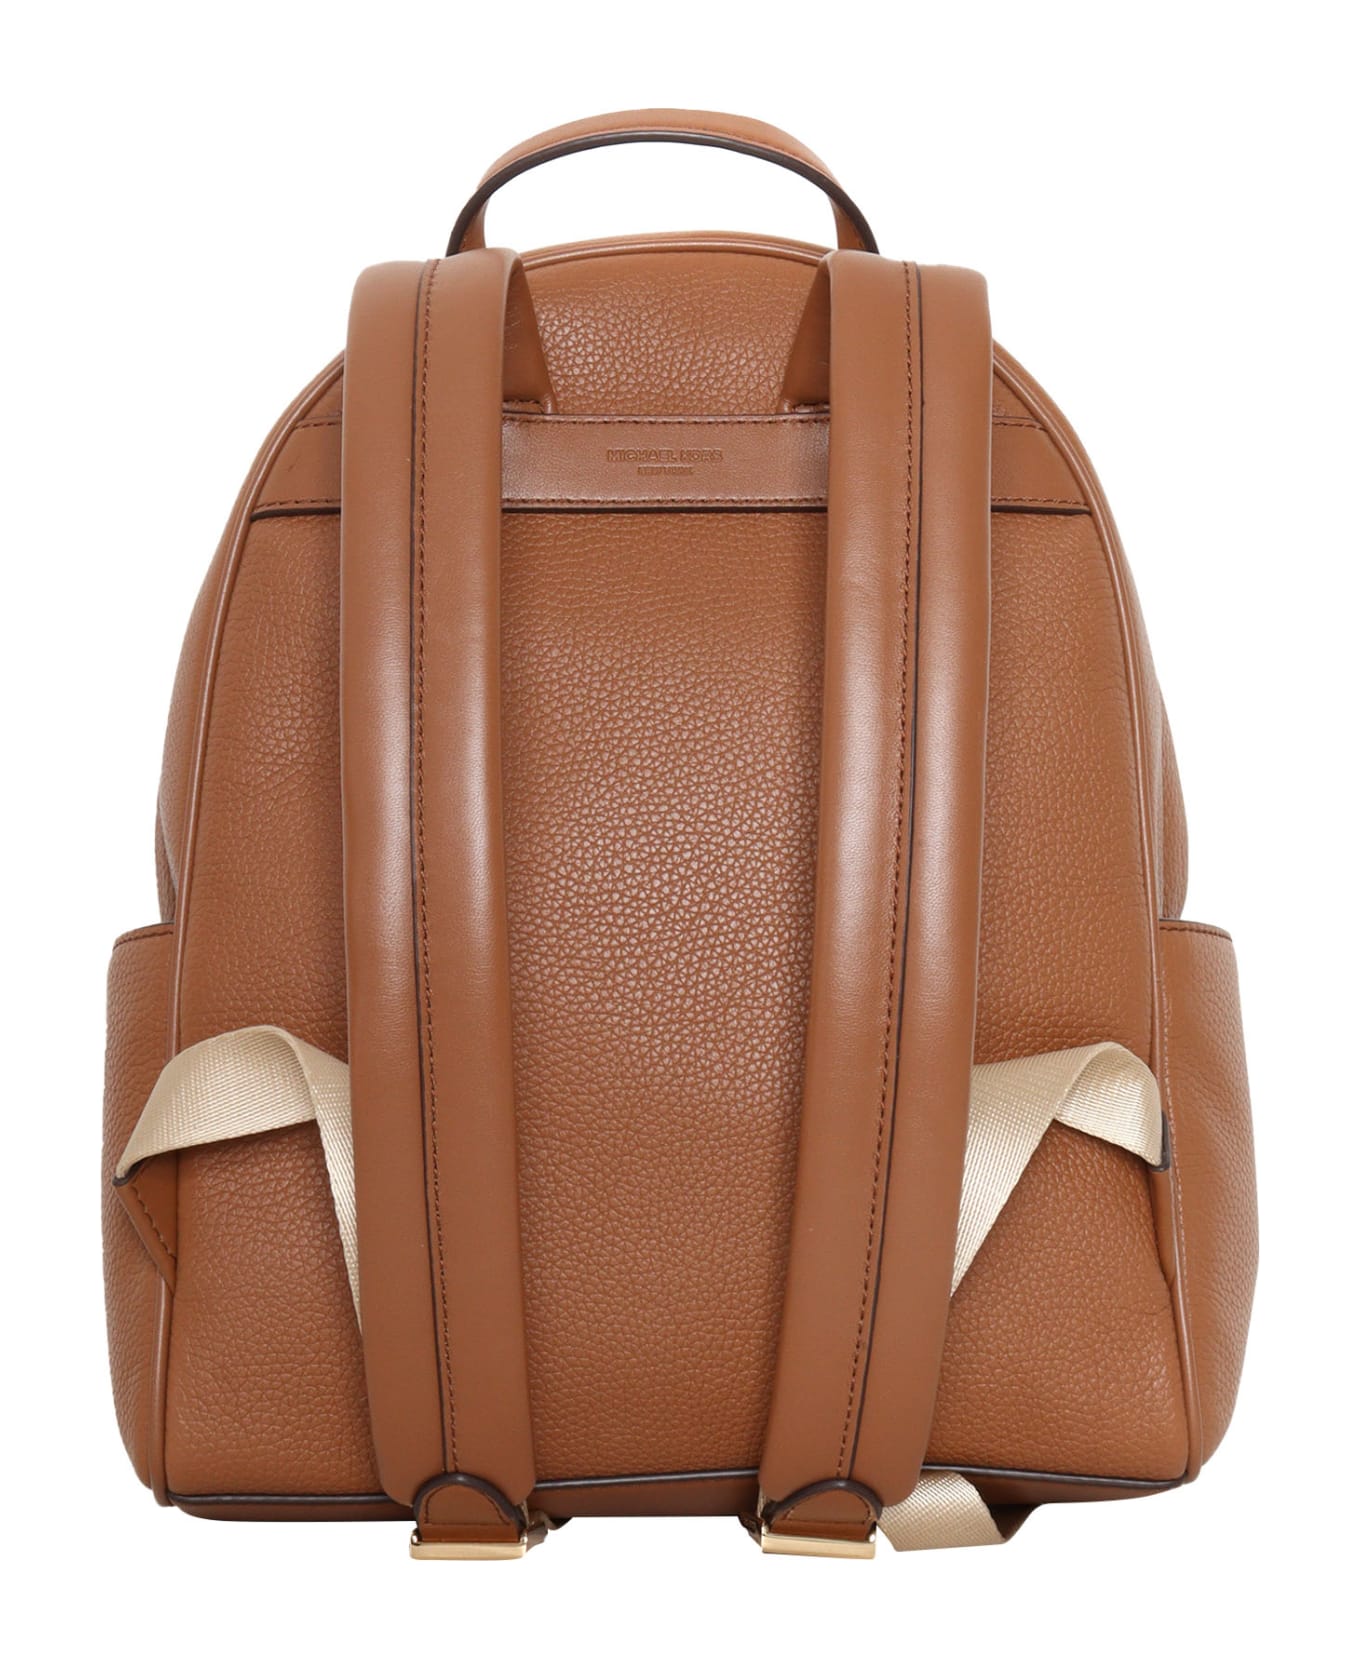 Michael Kors Brown Leather Backpack - BROWN